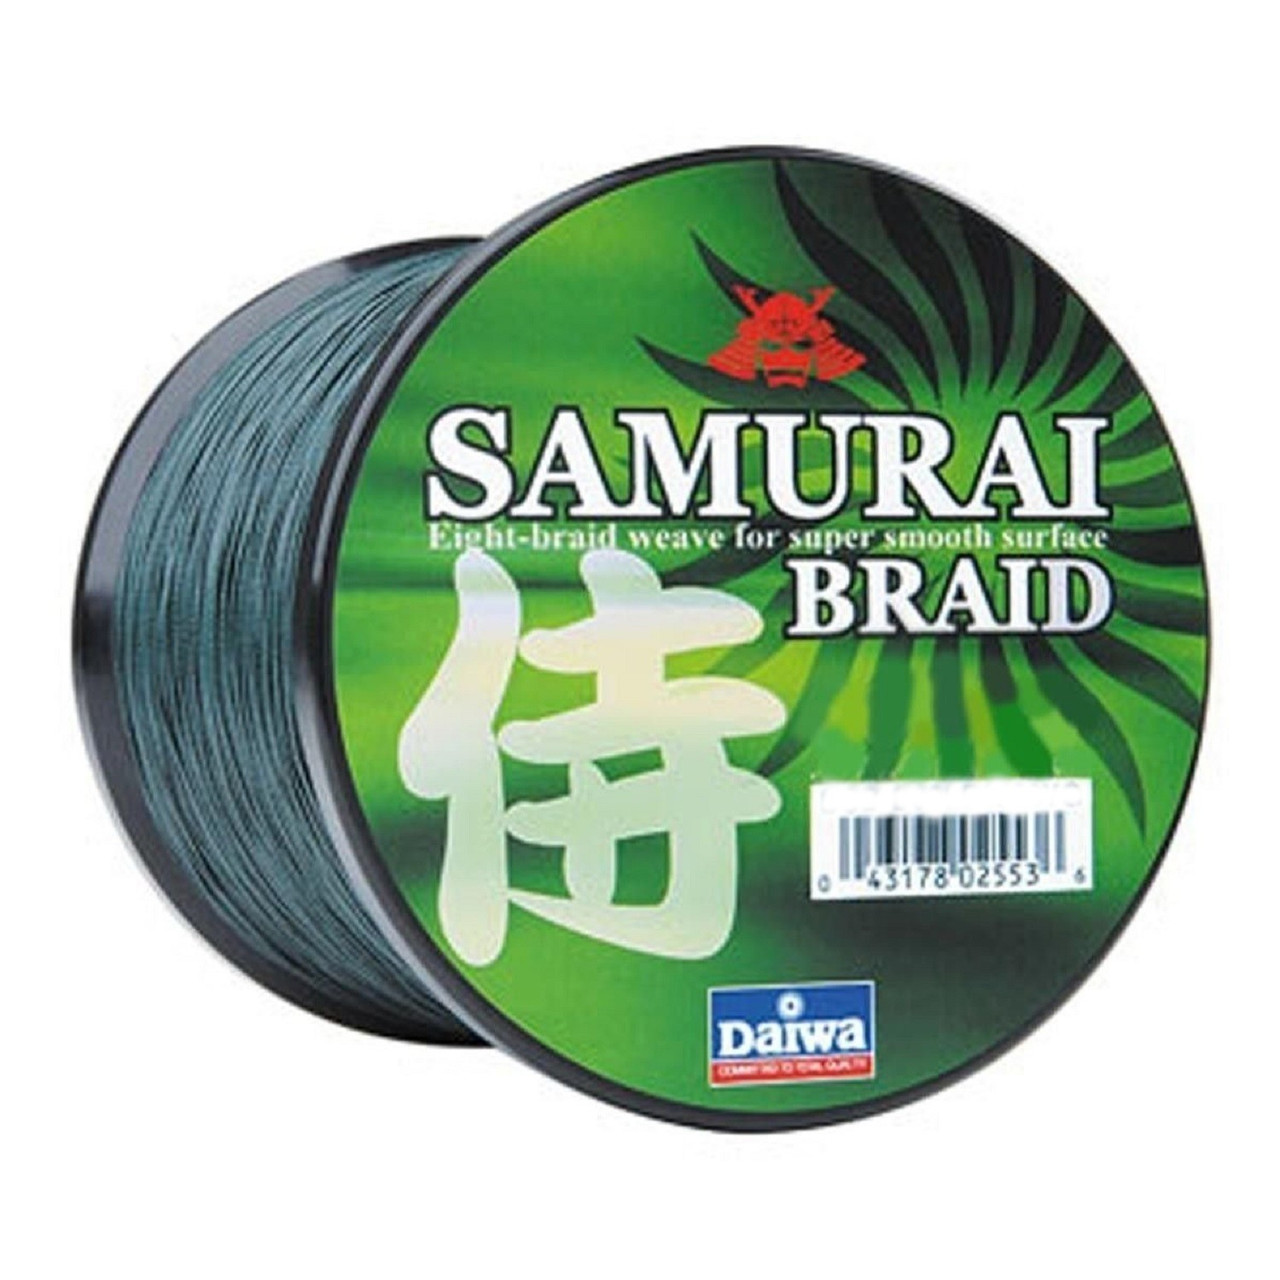 Daiwa Samurai Braided Line 30# Dark Green 1500 Yards DSB-B30LBG